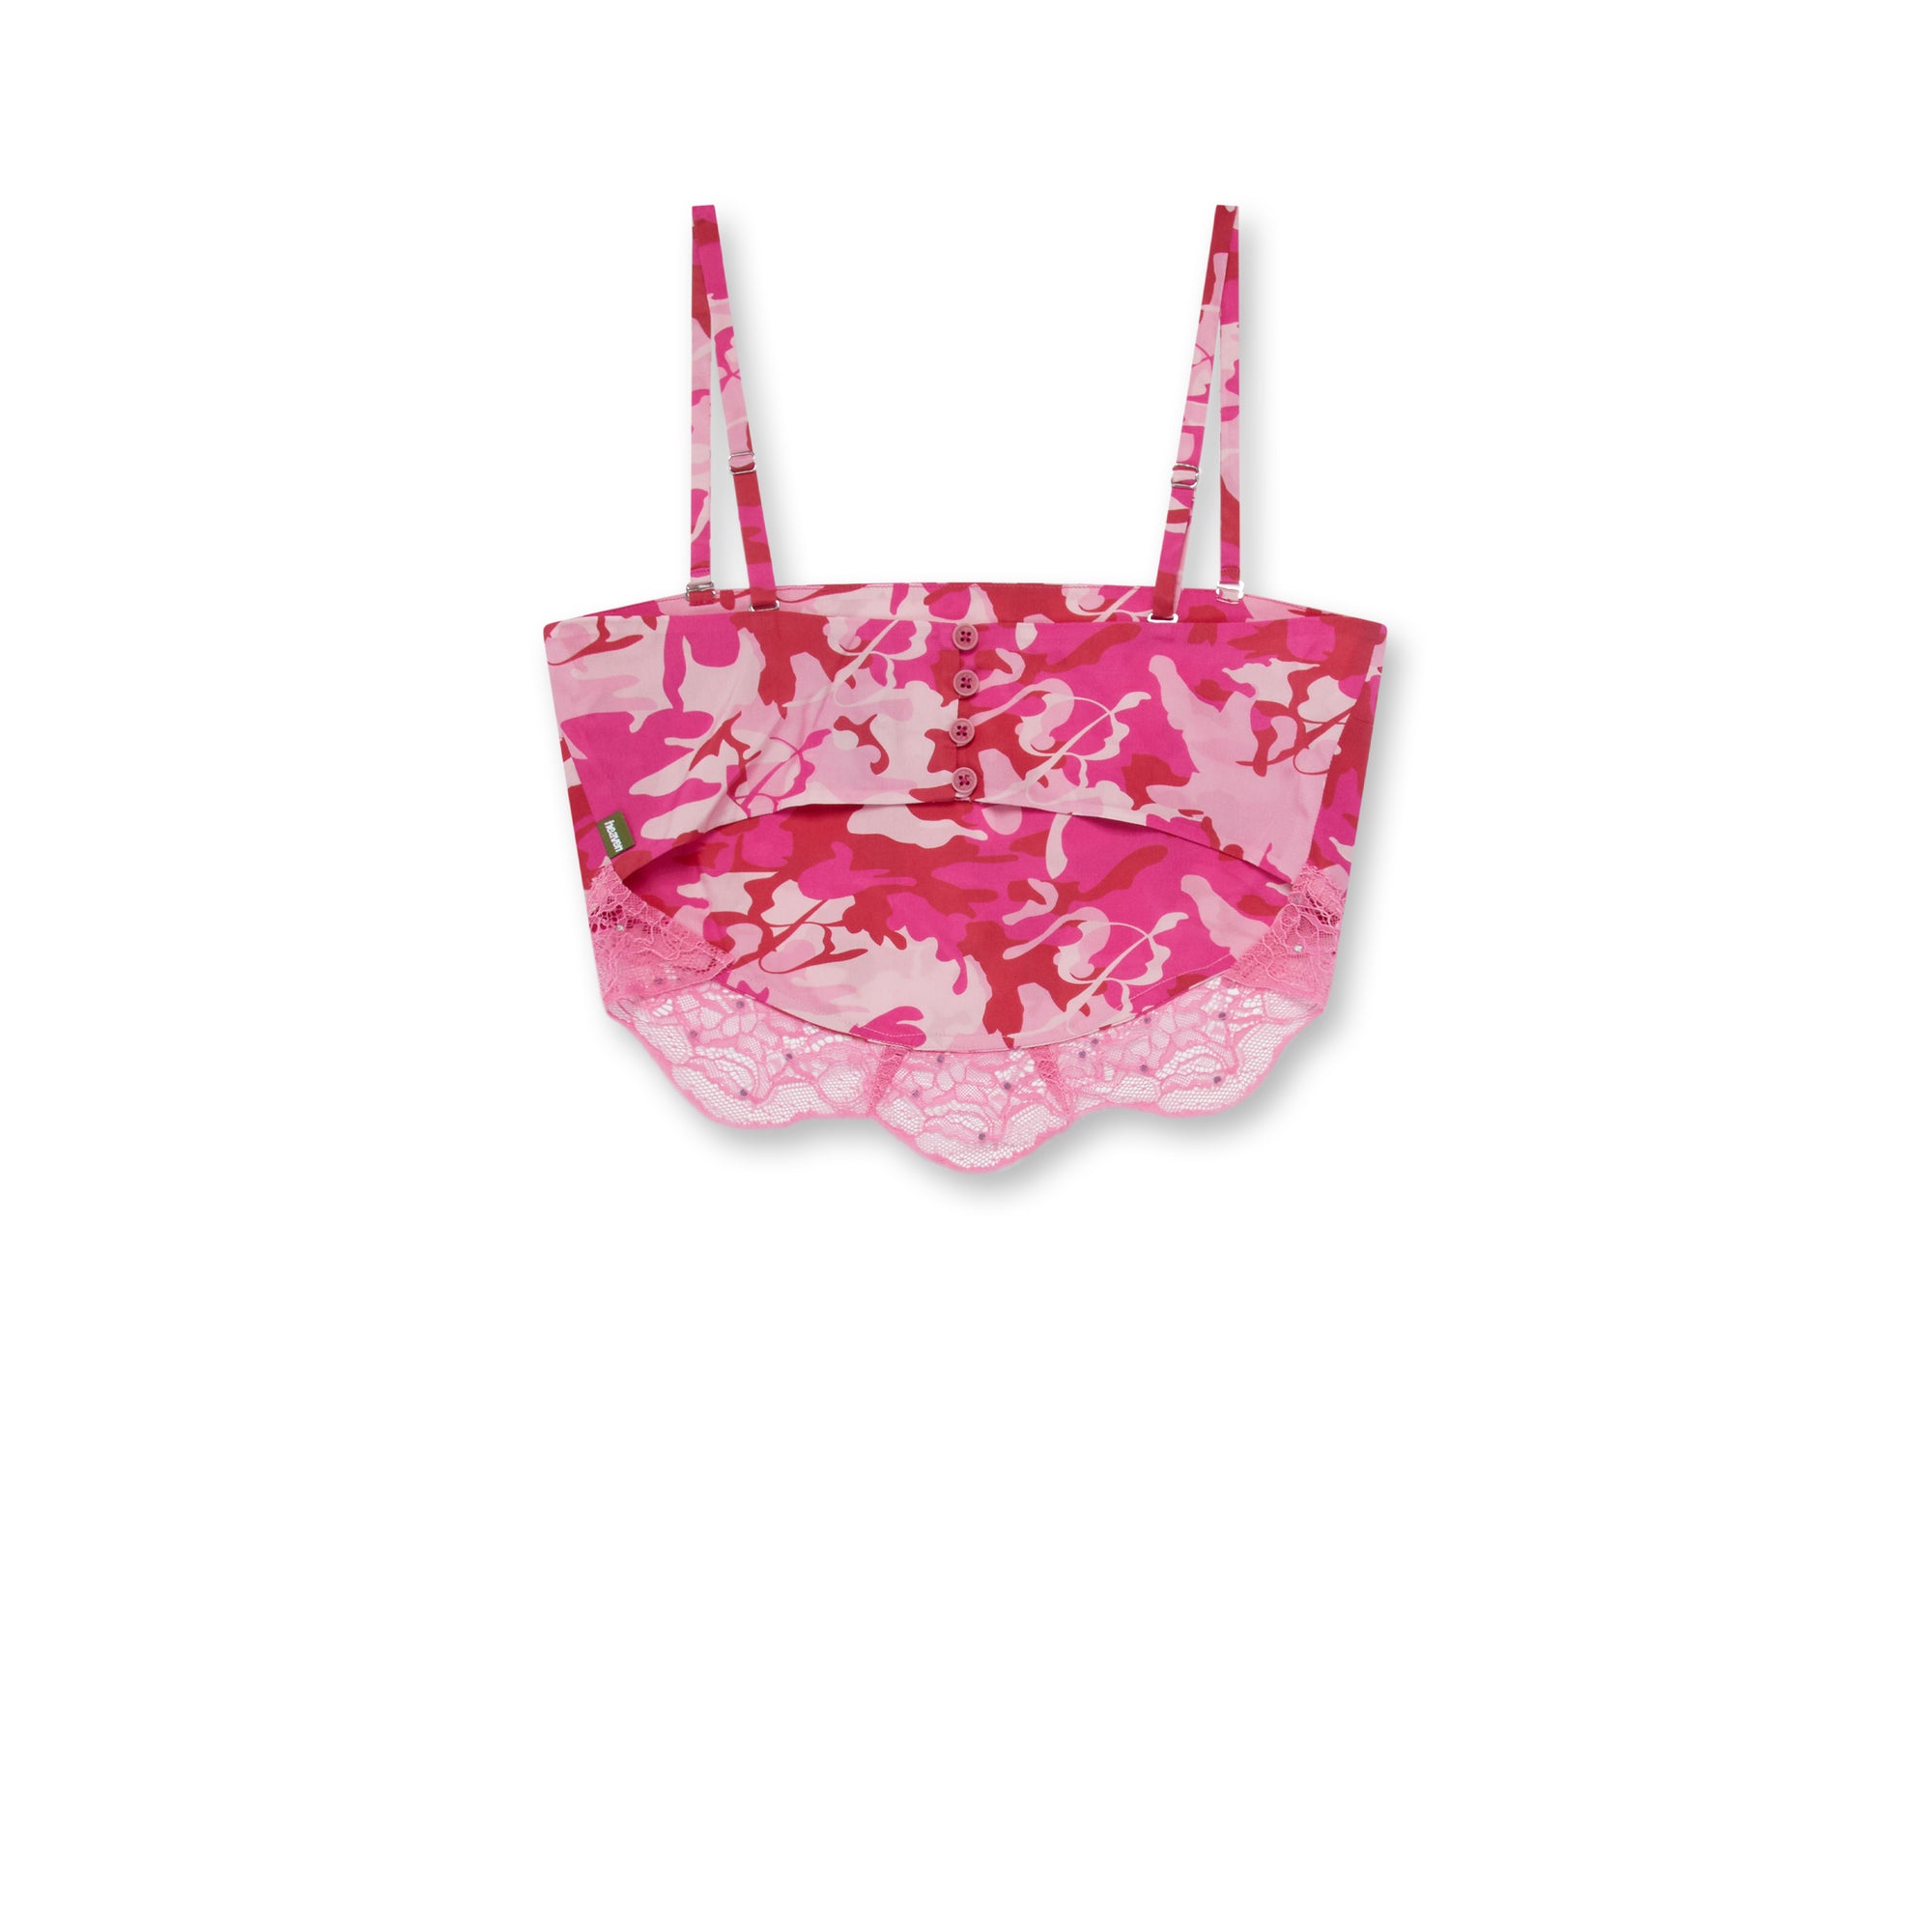 Blumarine by Marc Jacobs - Women's Pink Camo Bandana Lace Top - (Pink Multi) view 2